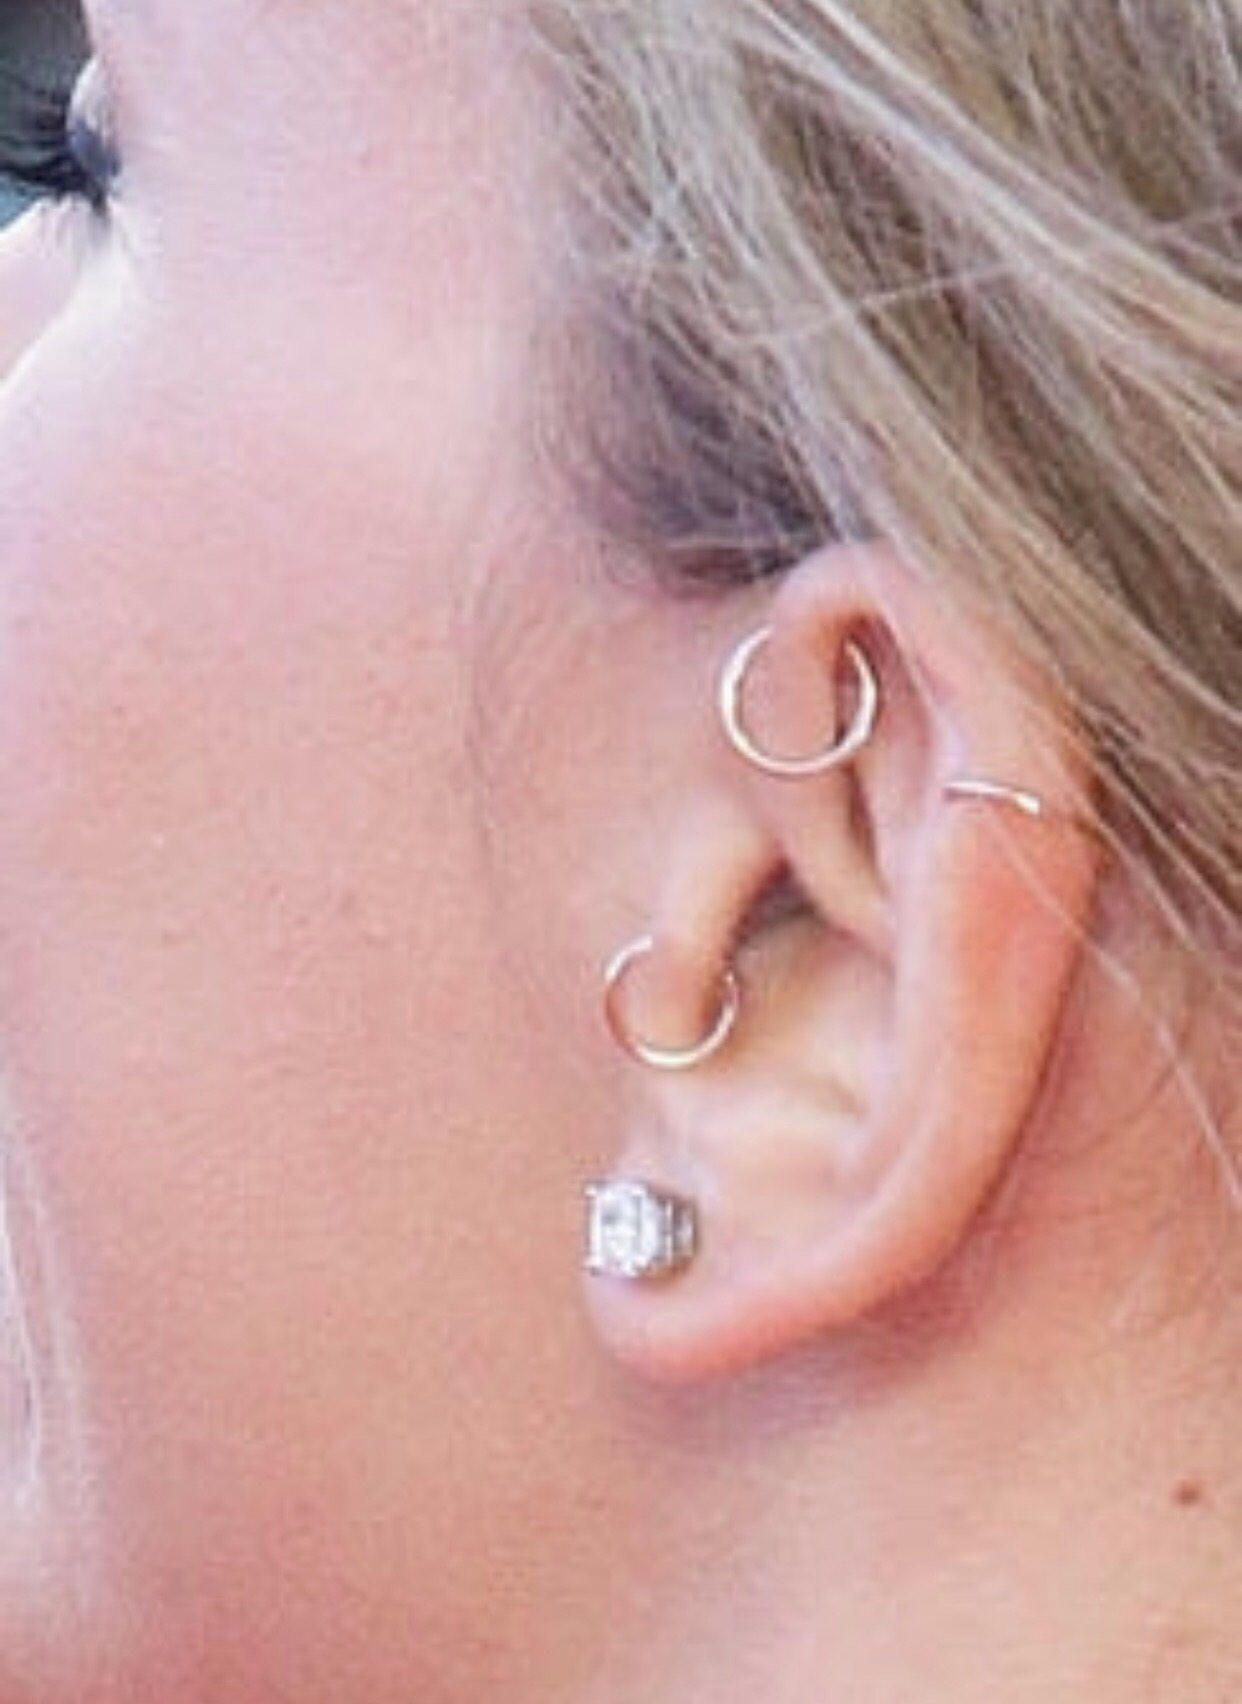 Cartilage Hoop Earrings Nose Ring Septum Mm Mm Mm Mm Mm Mm Mm